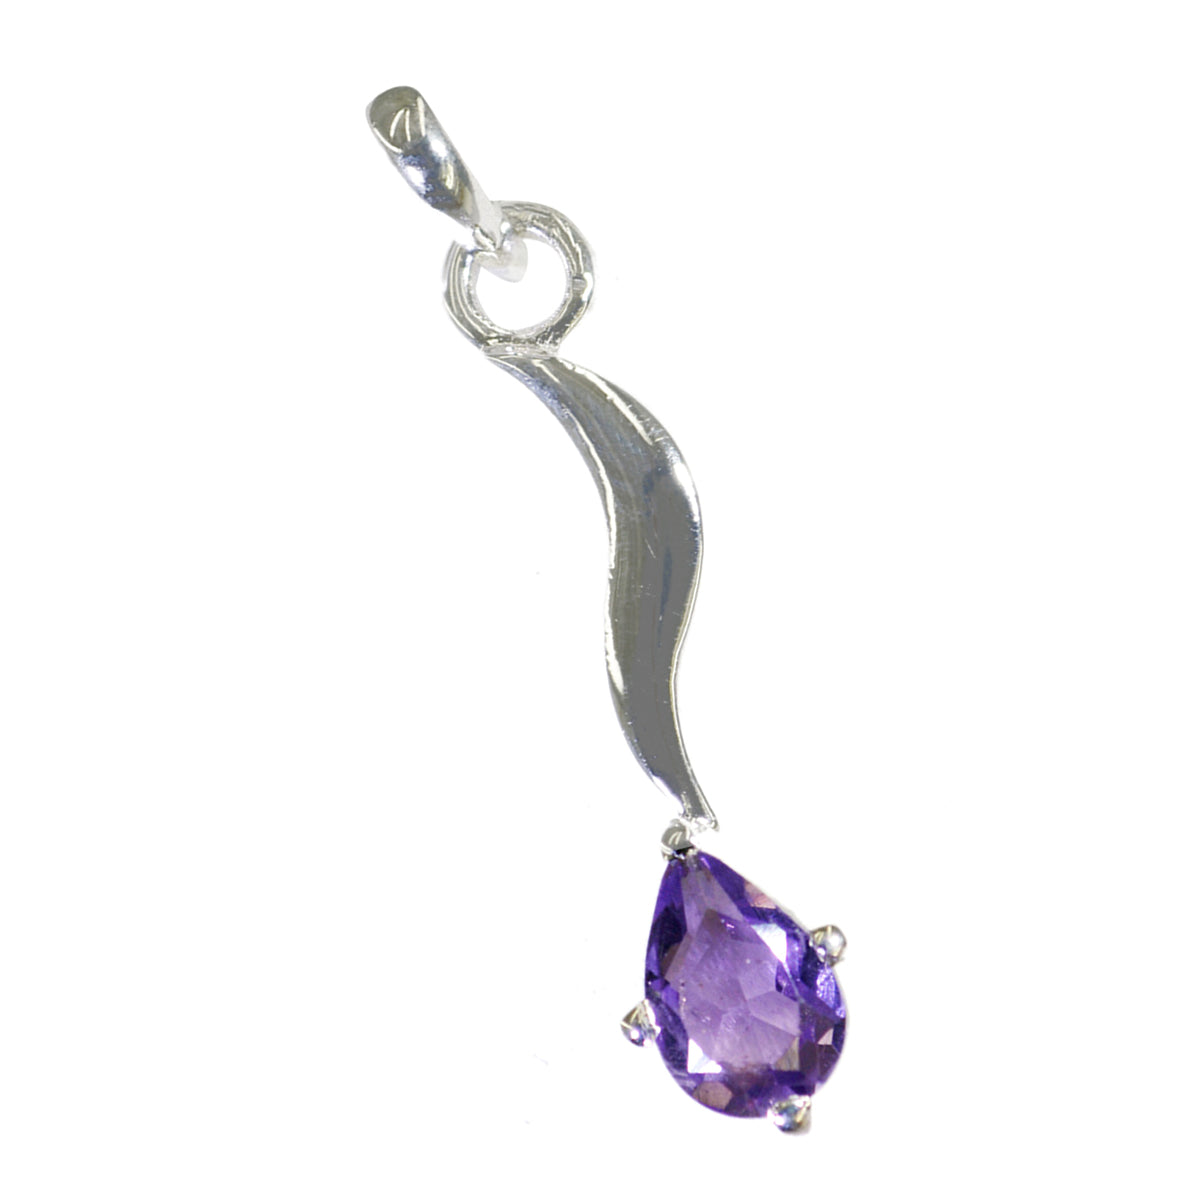 Riyo Good Gems Pear Faceted Purple Amethyst Silver Pendant Gift For Wife